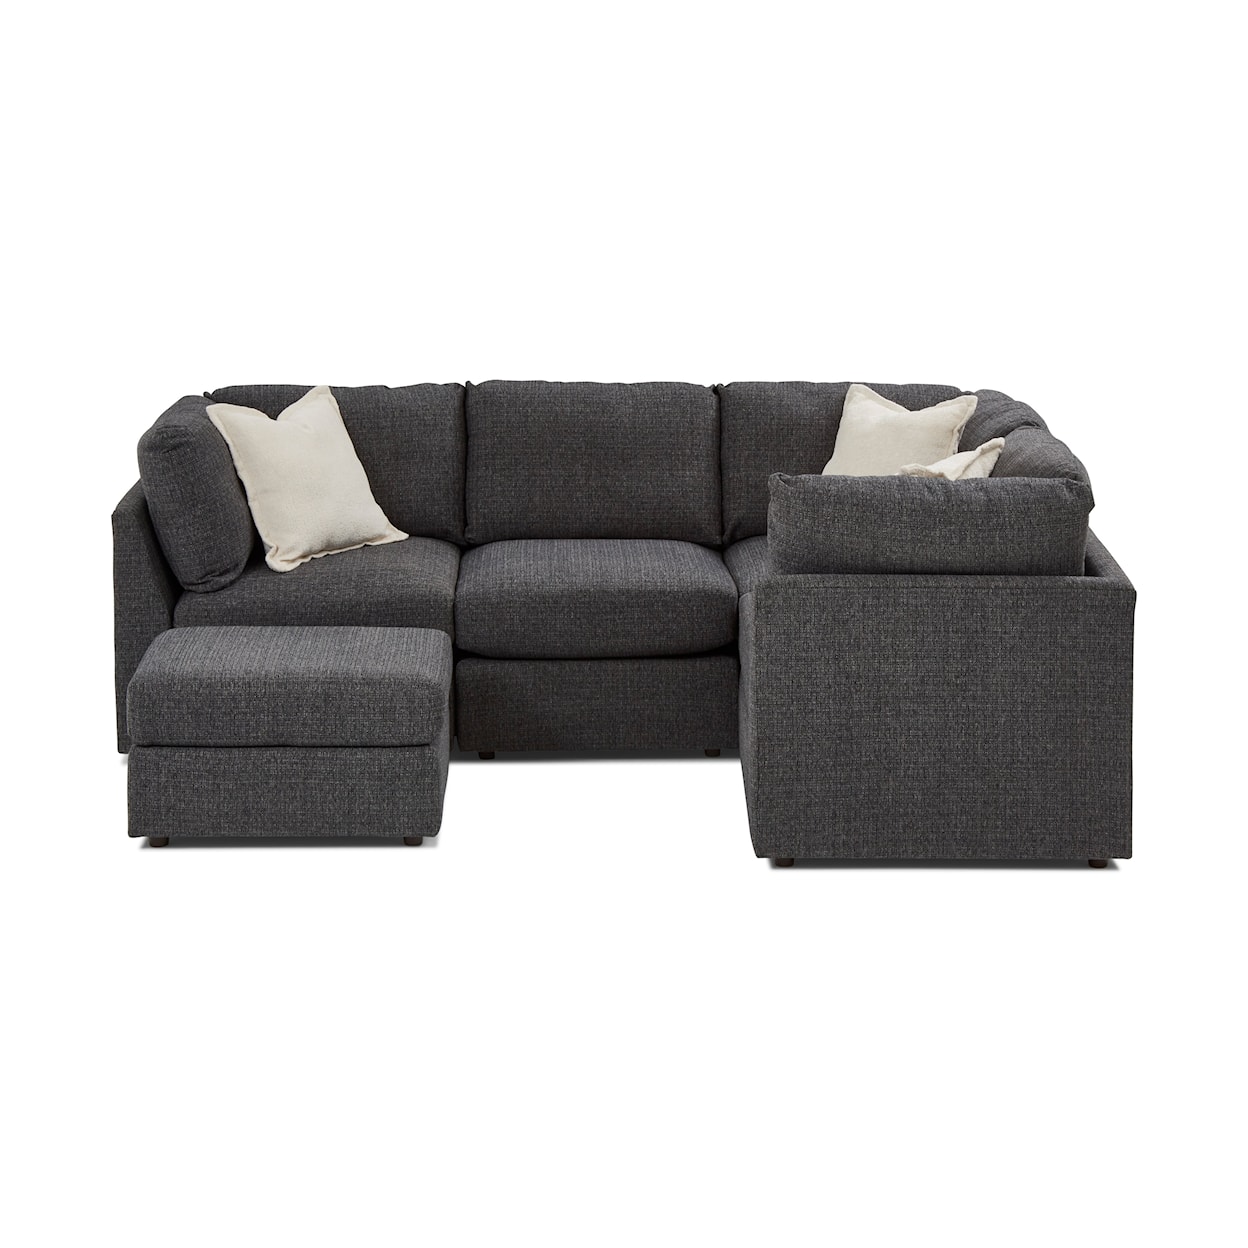 Best Home Furnishings Jelsea 6pc Modular Sofa